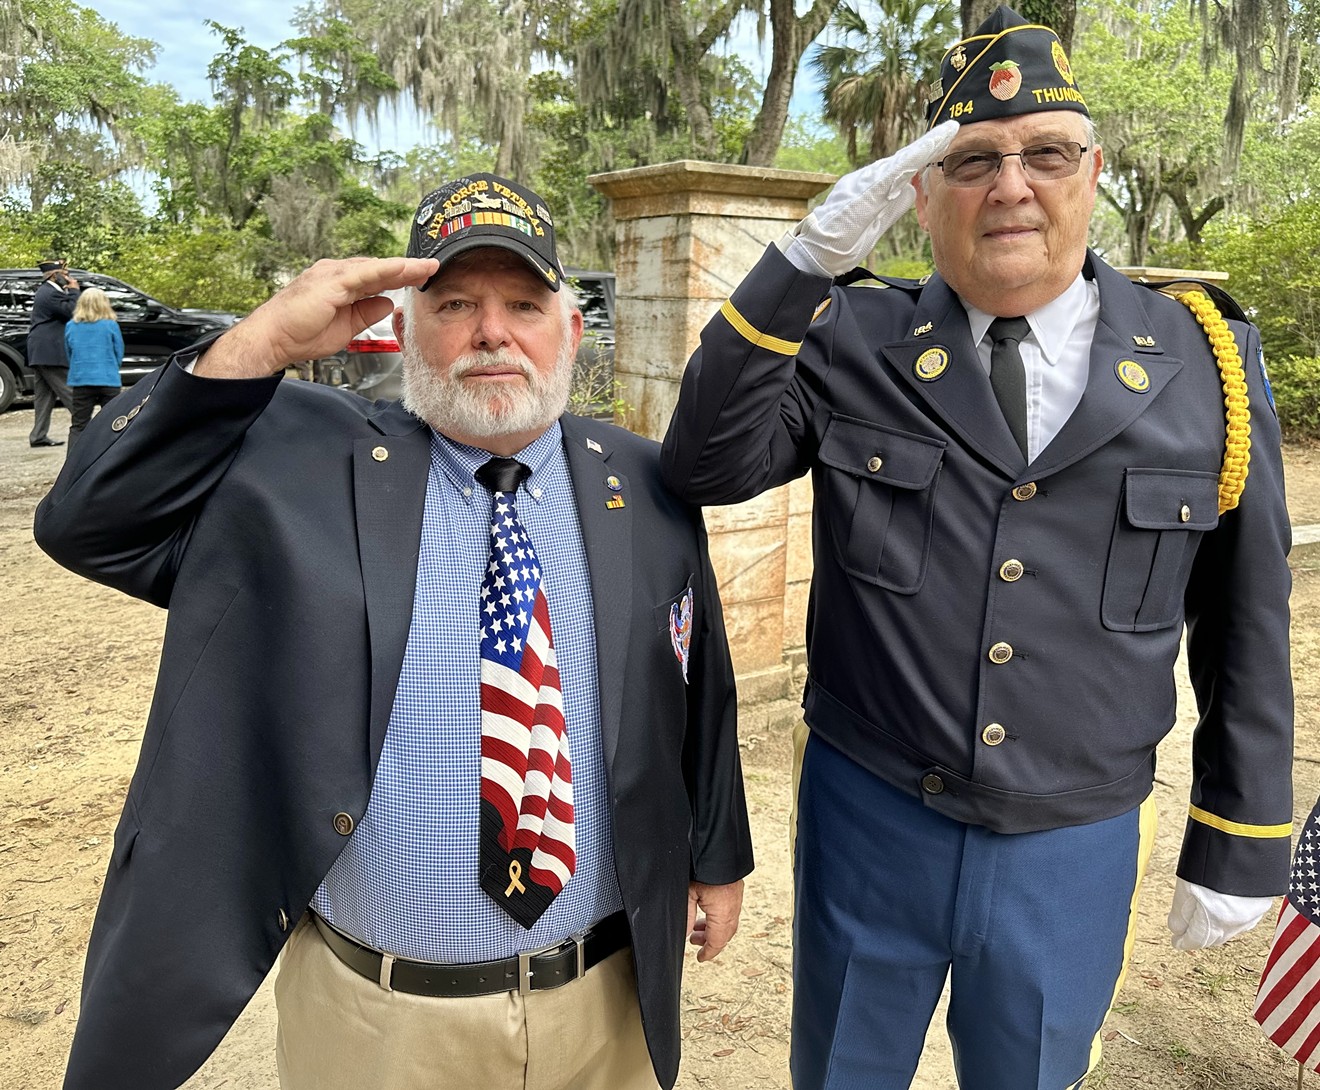 American Legion Memorial Day Service